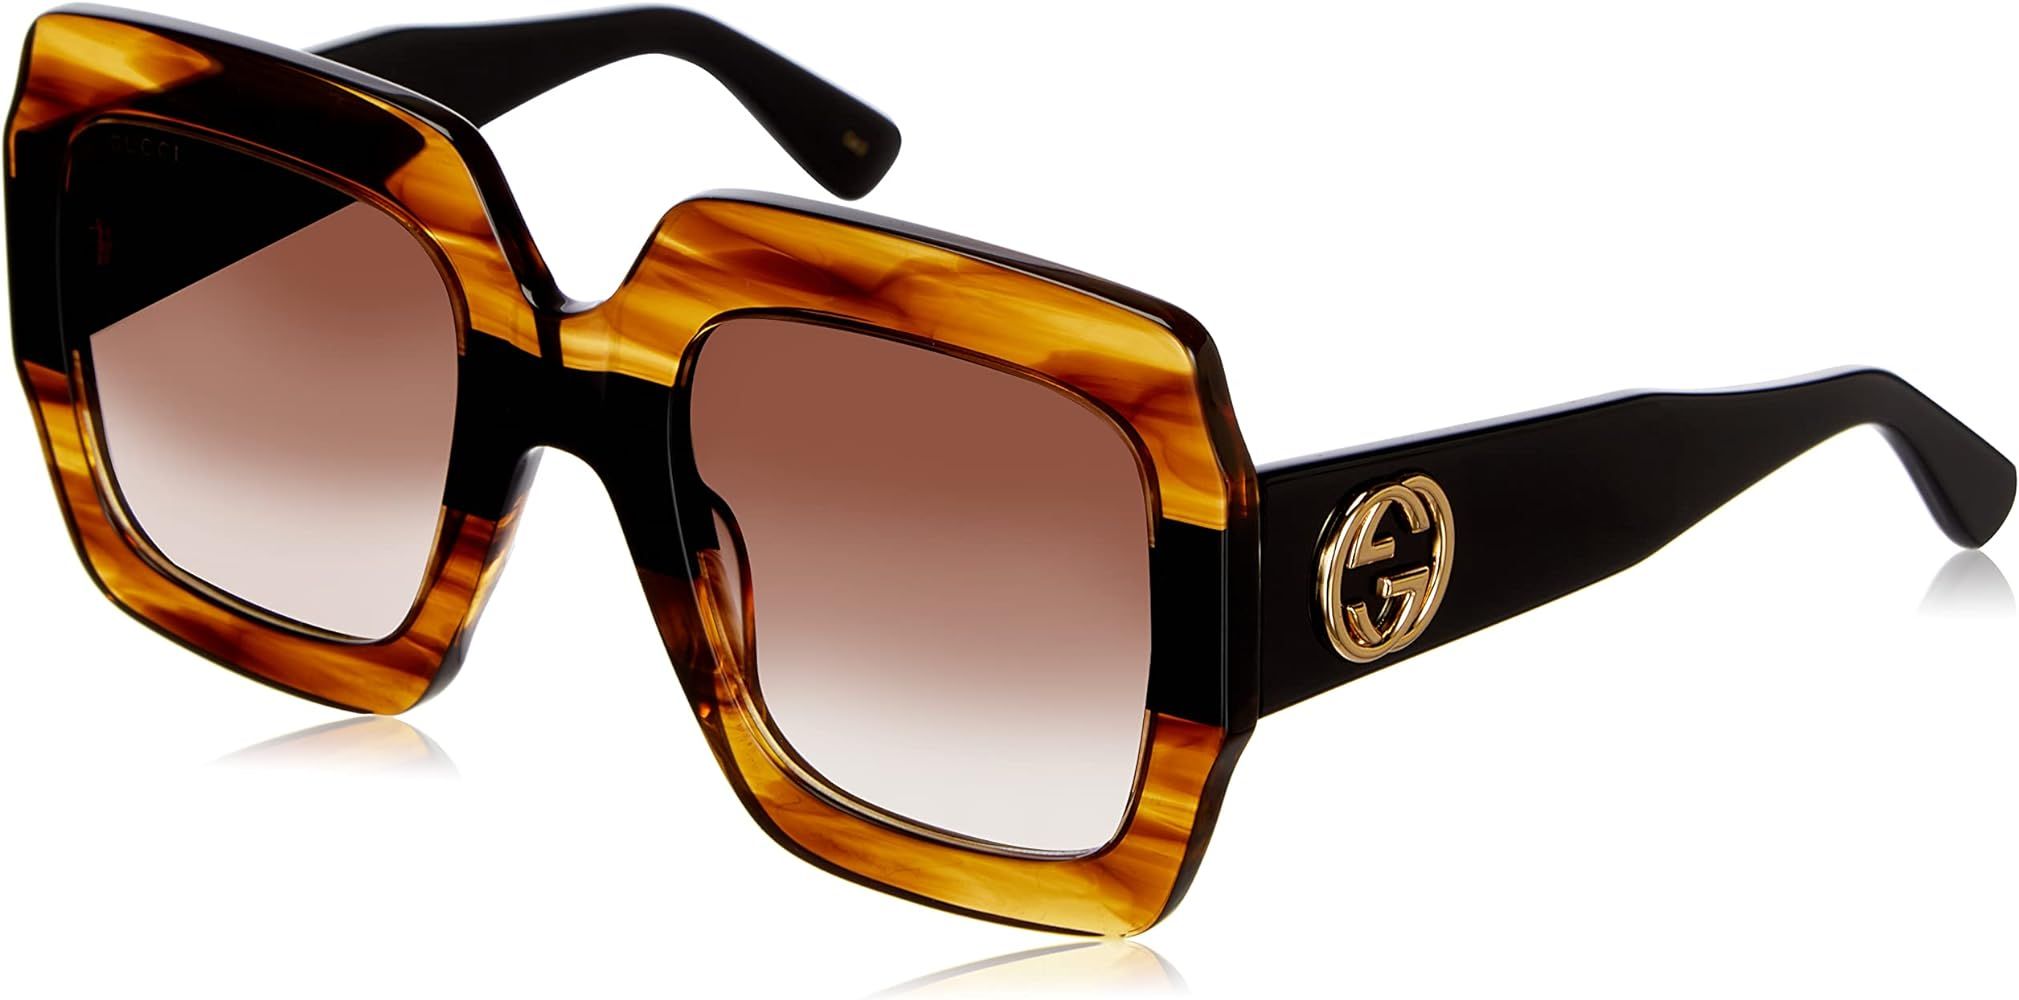 Gucci sunglasses (GG-0178-S 004) Transparent Havana - Shiny Black - Brown Gradient lenses | Amazon (US)